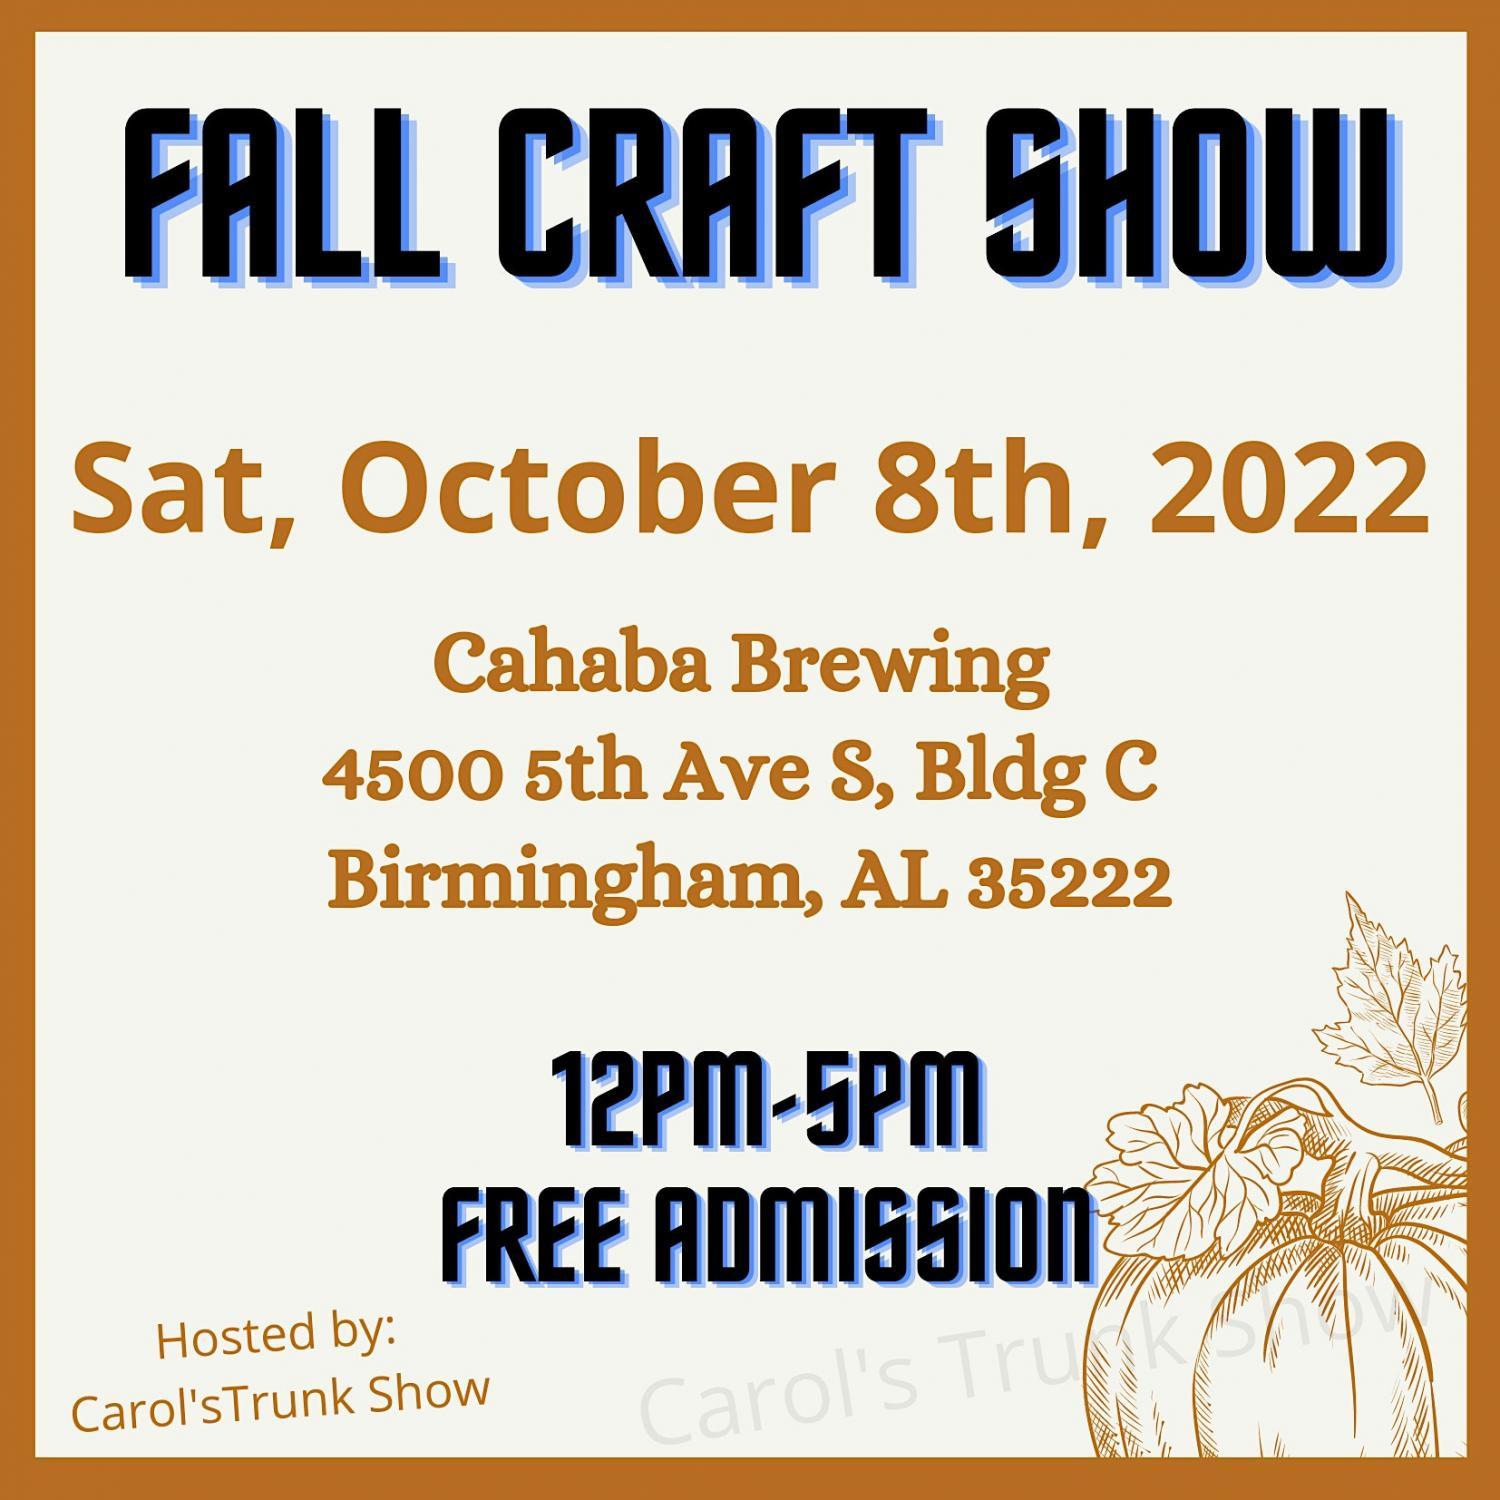 Fall Craft Show
Sat Oct 8, 12:00 PM - Sat Oct 8, 5:00 PM